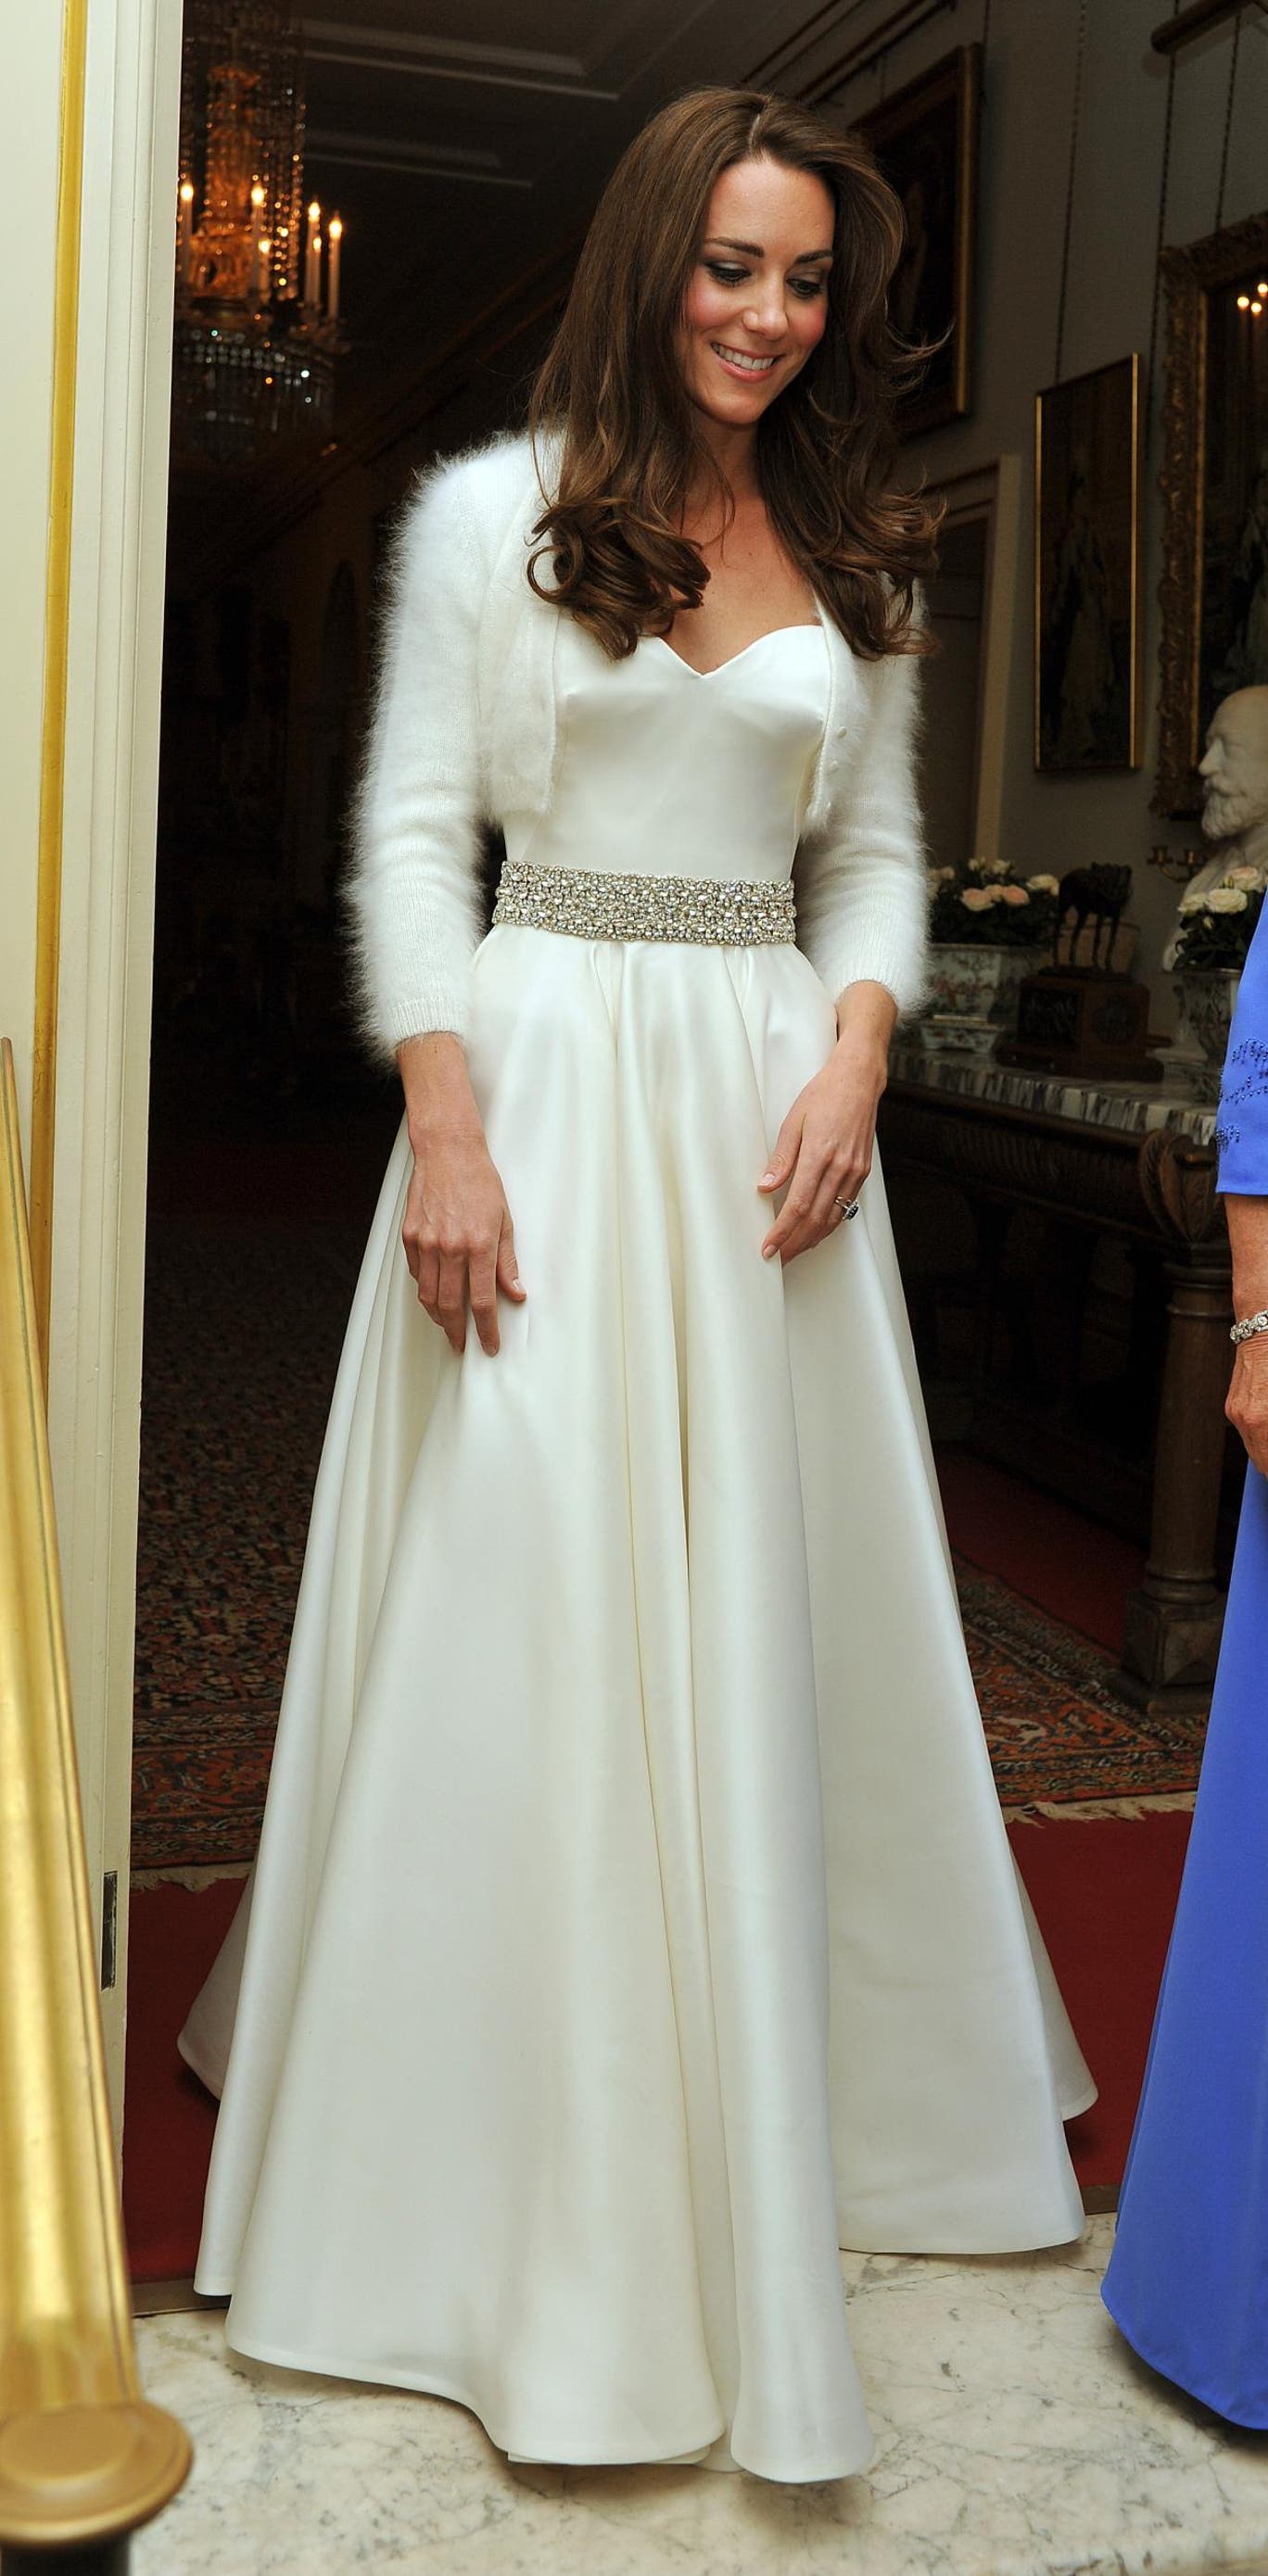 Kate Middleton during her wedding reception